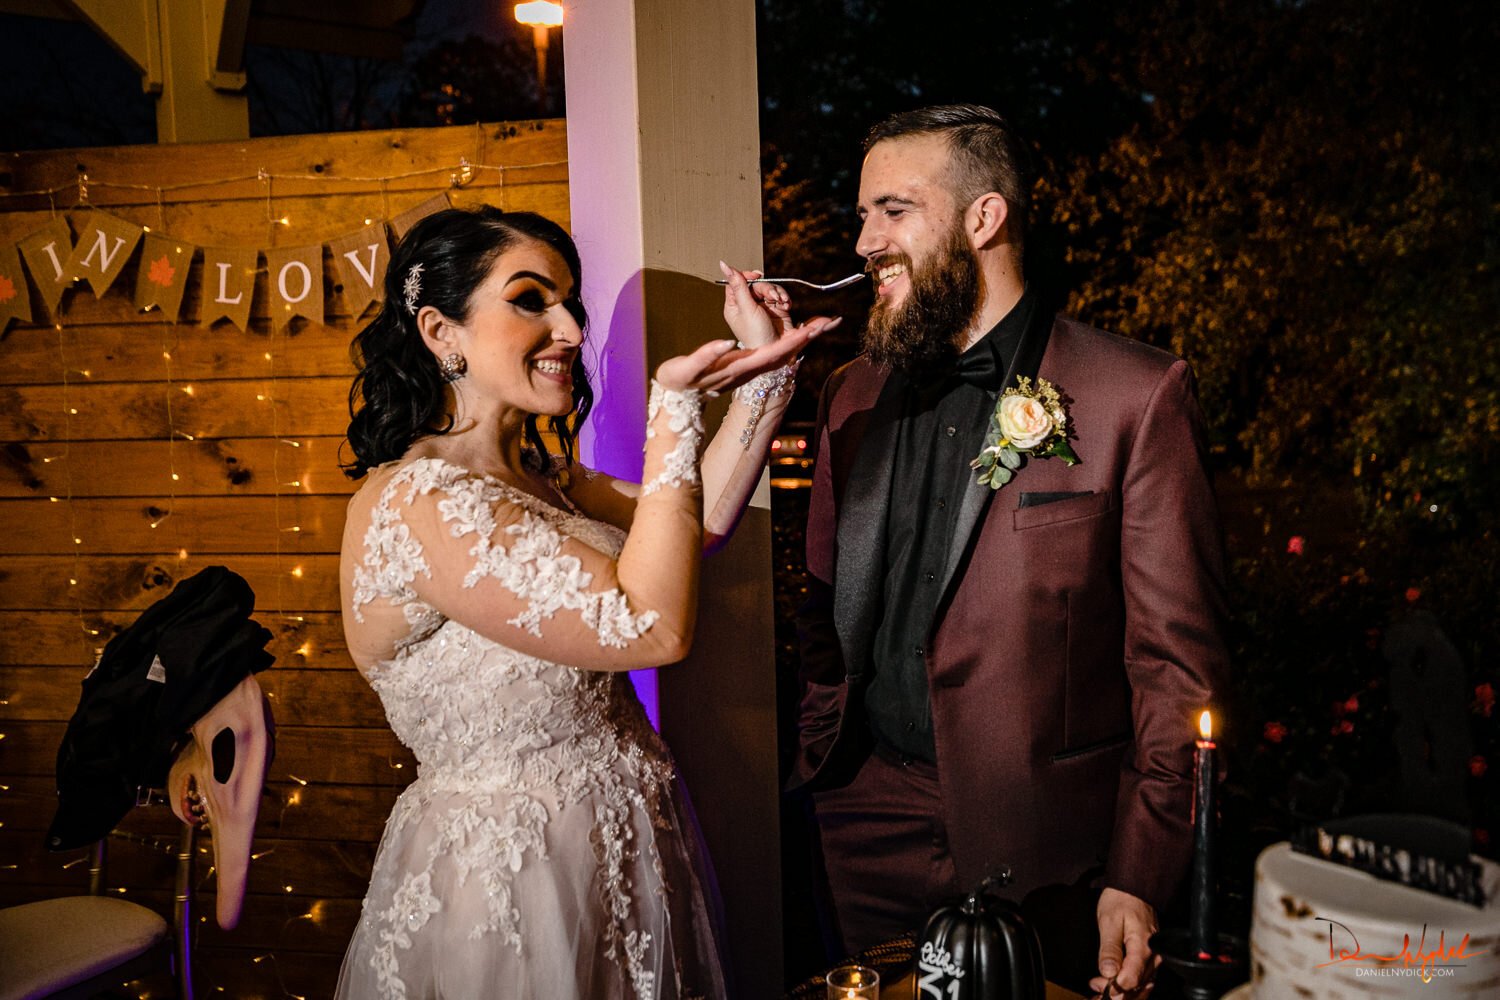 nj pinup goth bride feeding groom cake  at halloween wedding